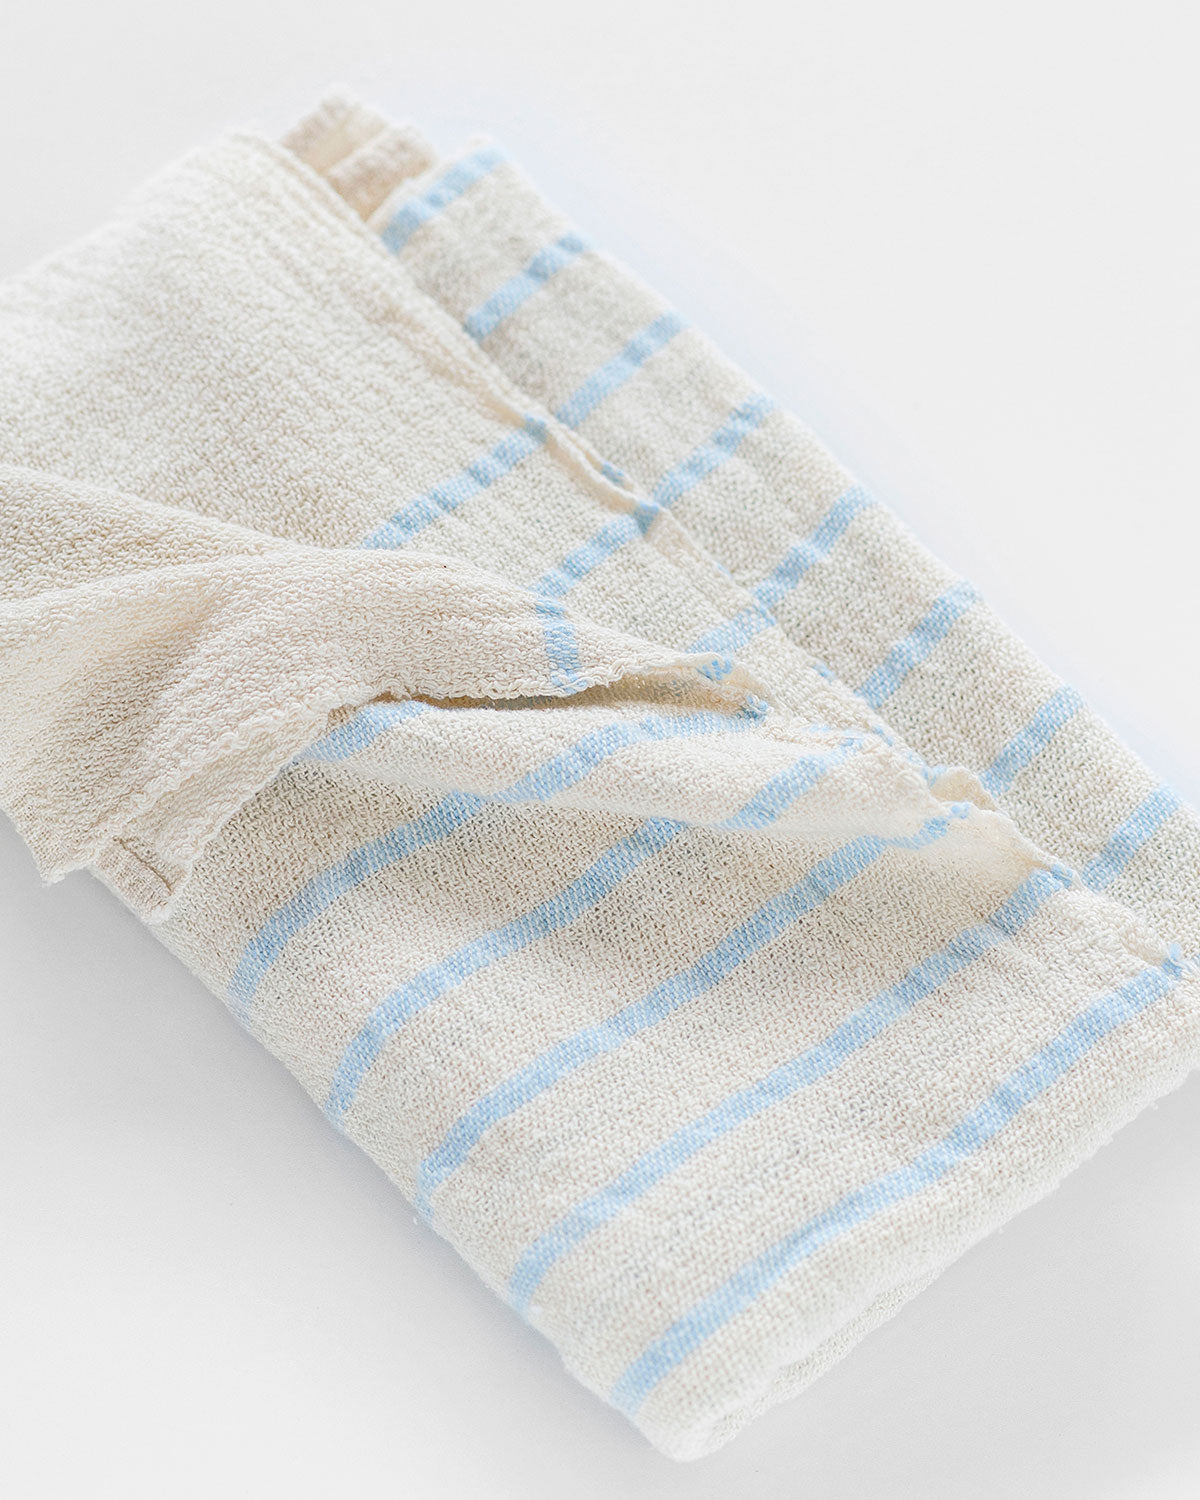 Nursery_BabyBlanket_Handwoven_Cotton_Stripe_blue